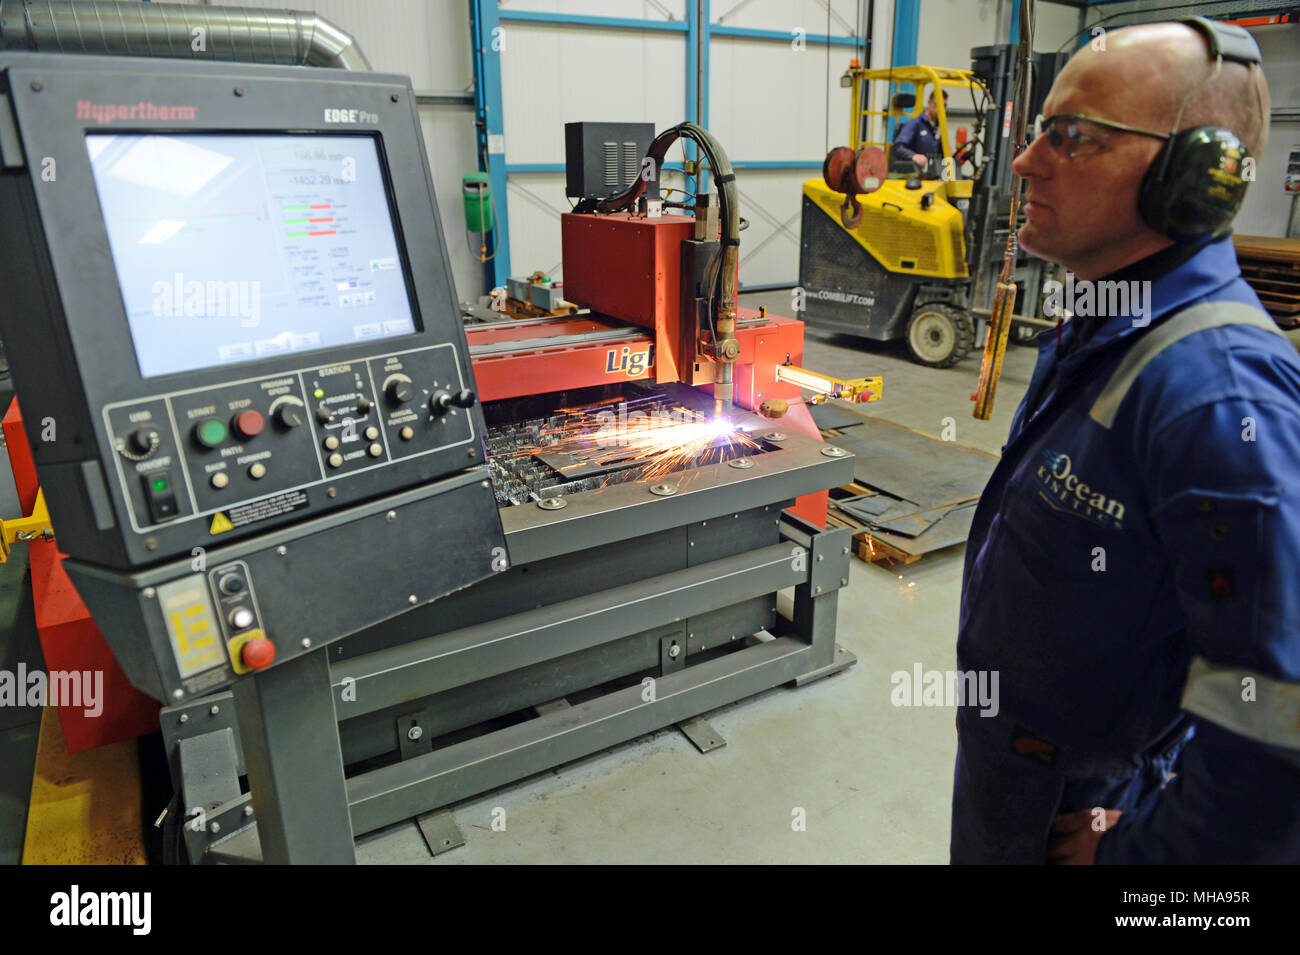 Man working on a metal plasma cutting machine in an engineering workshop Stock Photo